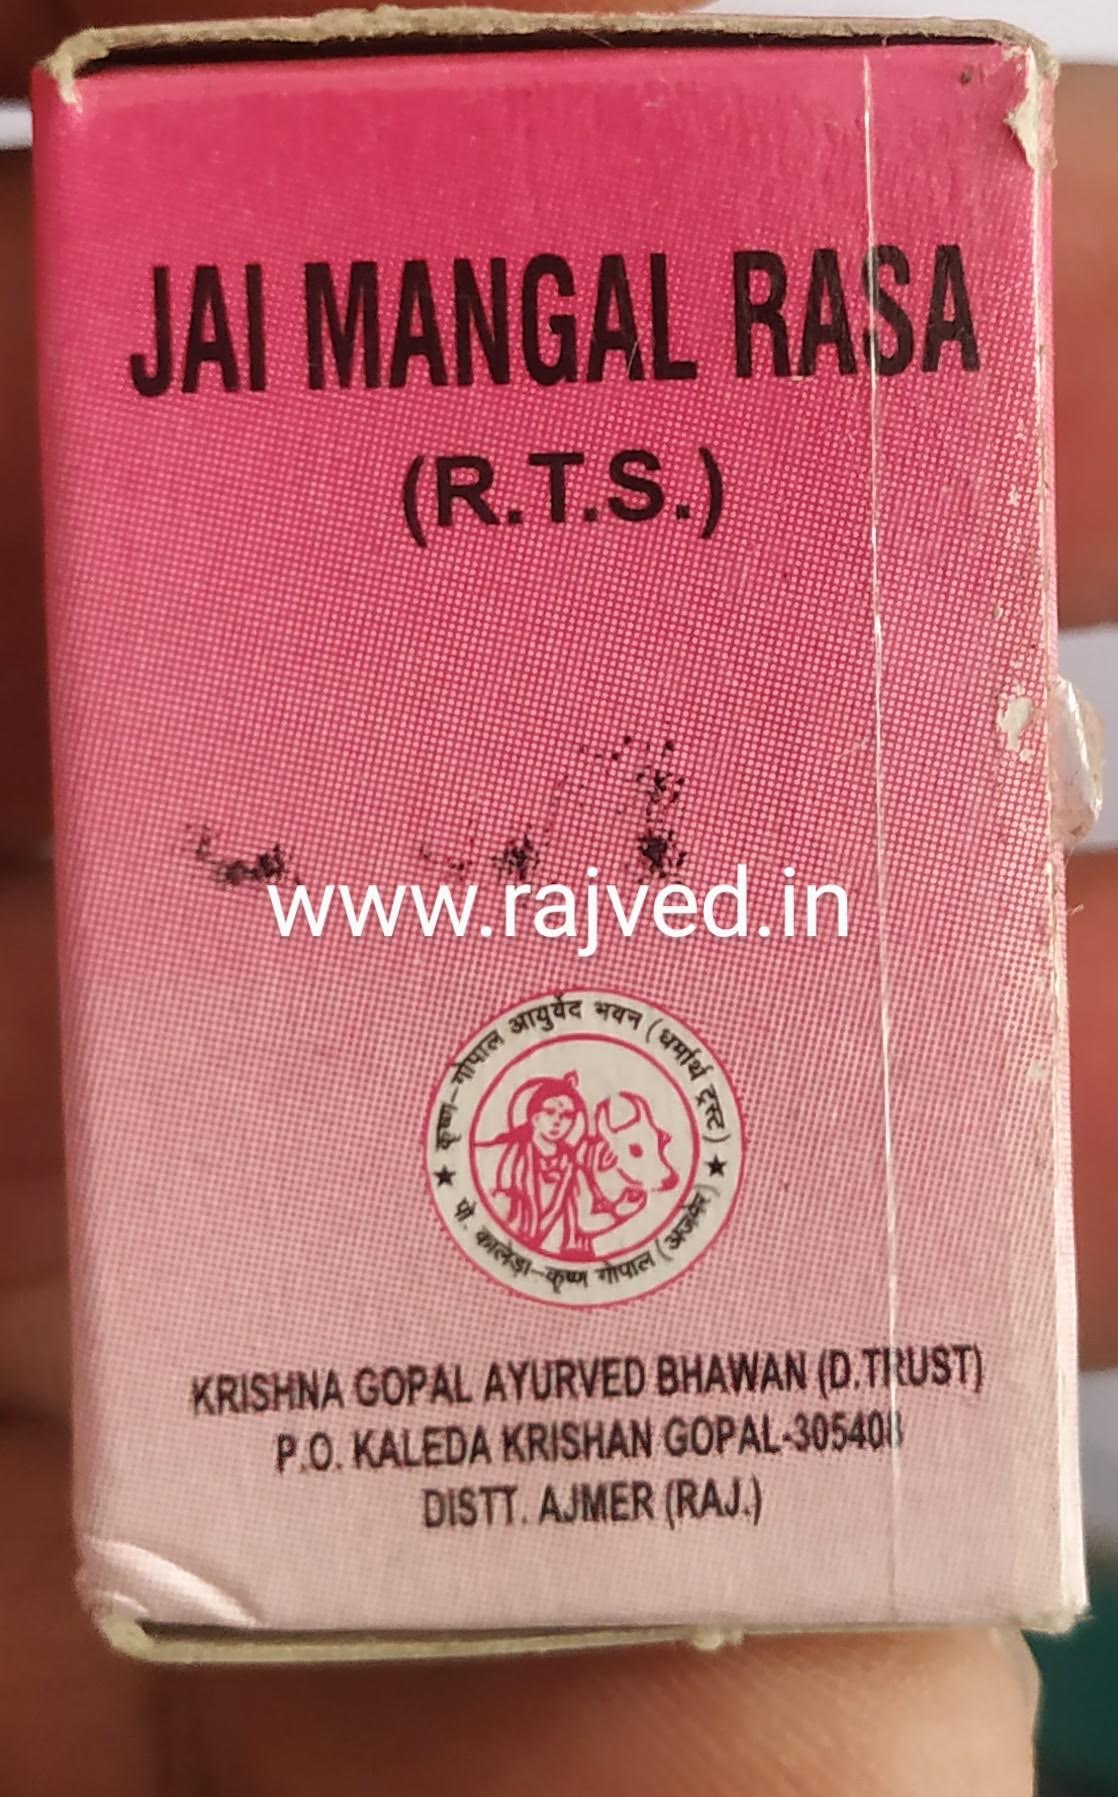 jayamangal ras 500mg upto 20% off Krishna Gopal Ayurved bhavan